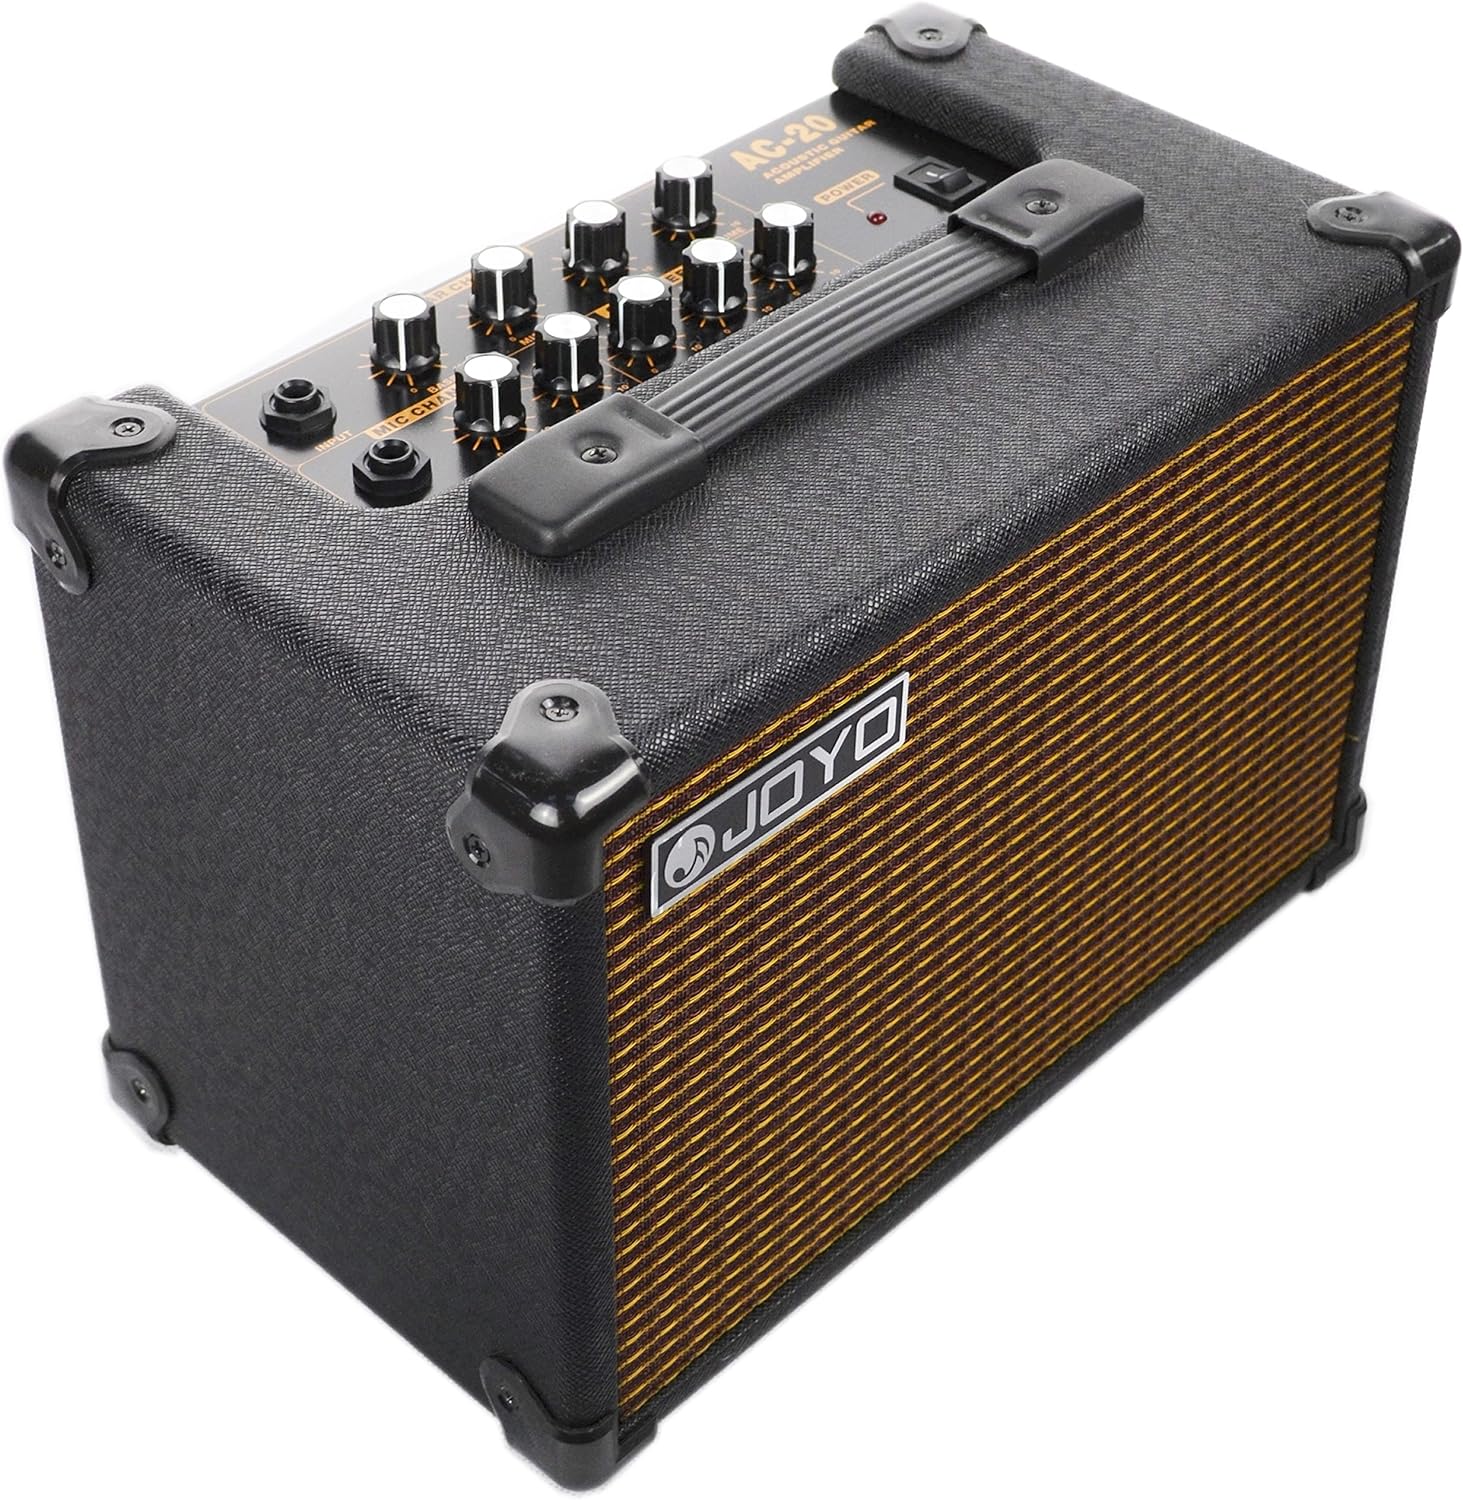 Joyo AC-20 20Watts Acoustic Guitar Amplifier - ETONE.SHOP